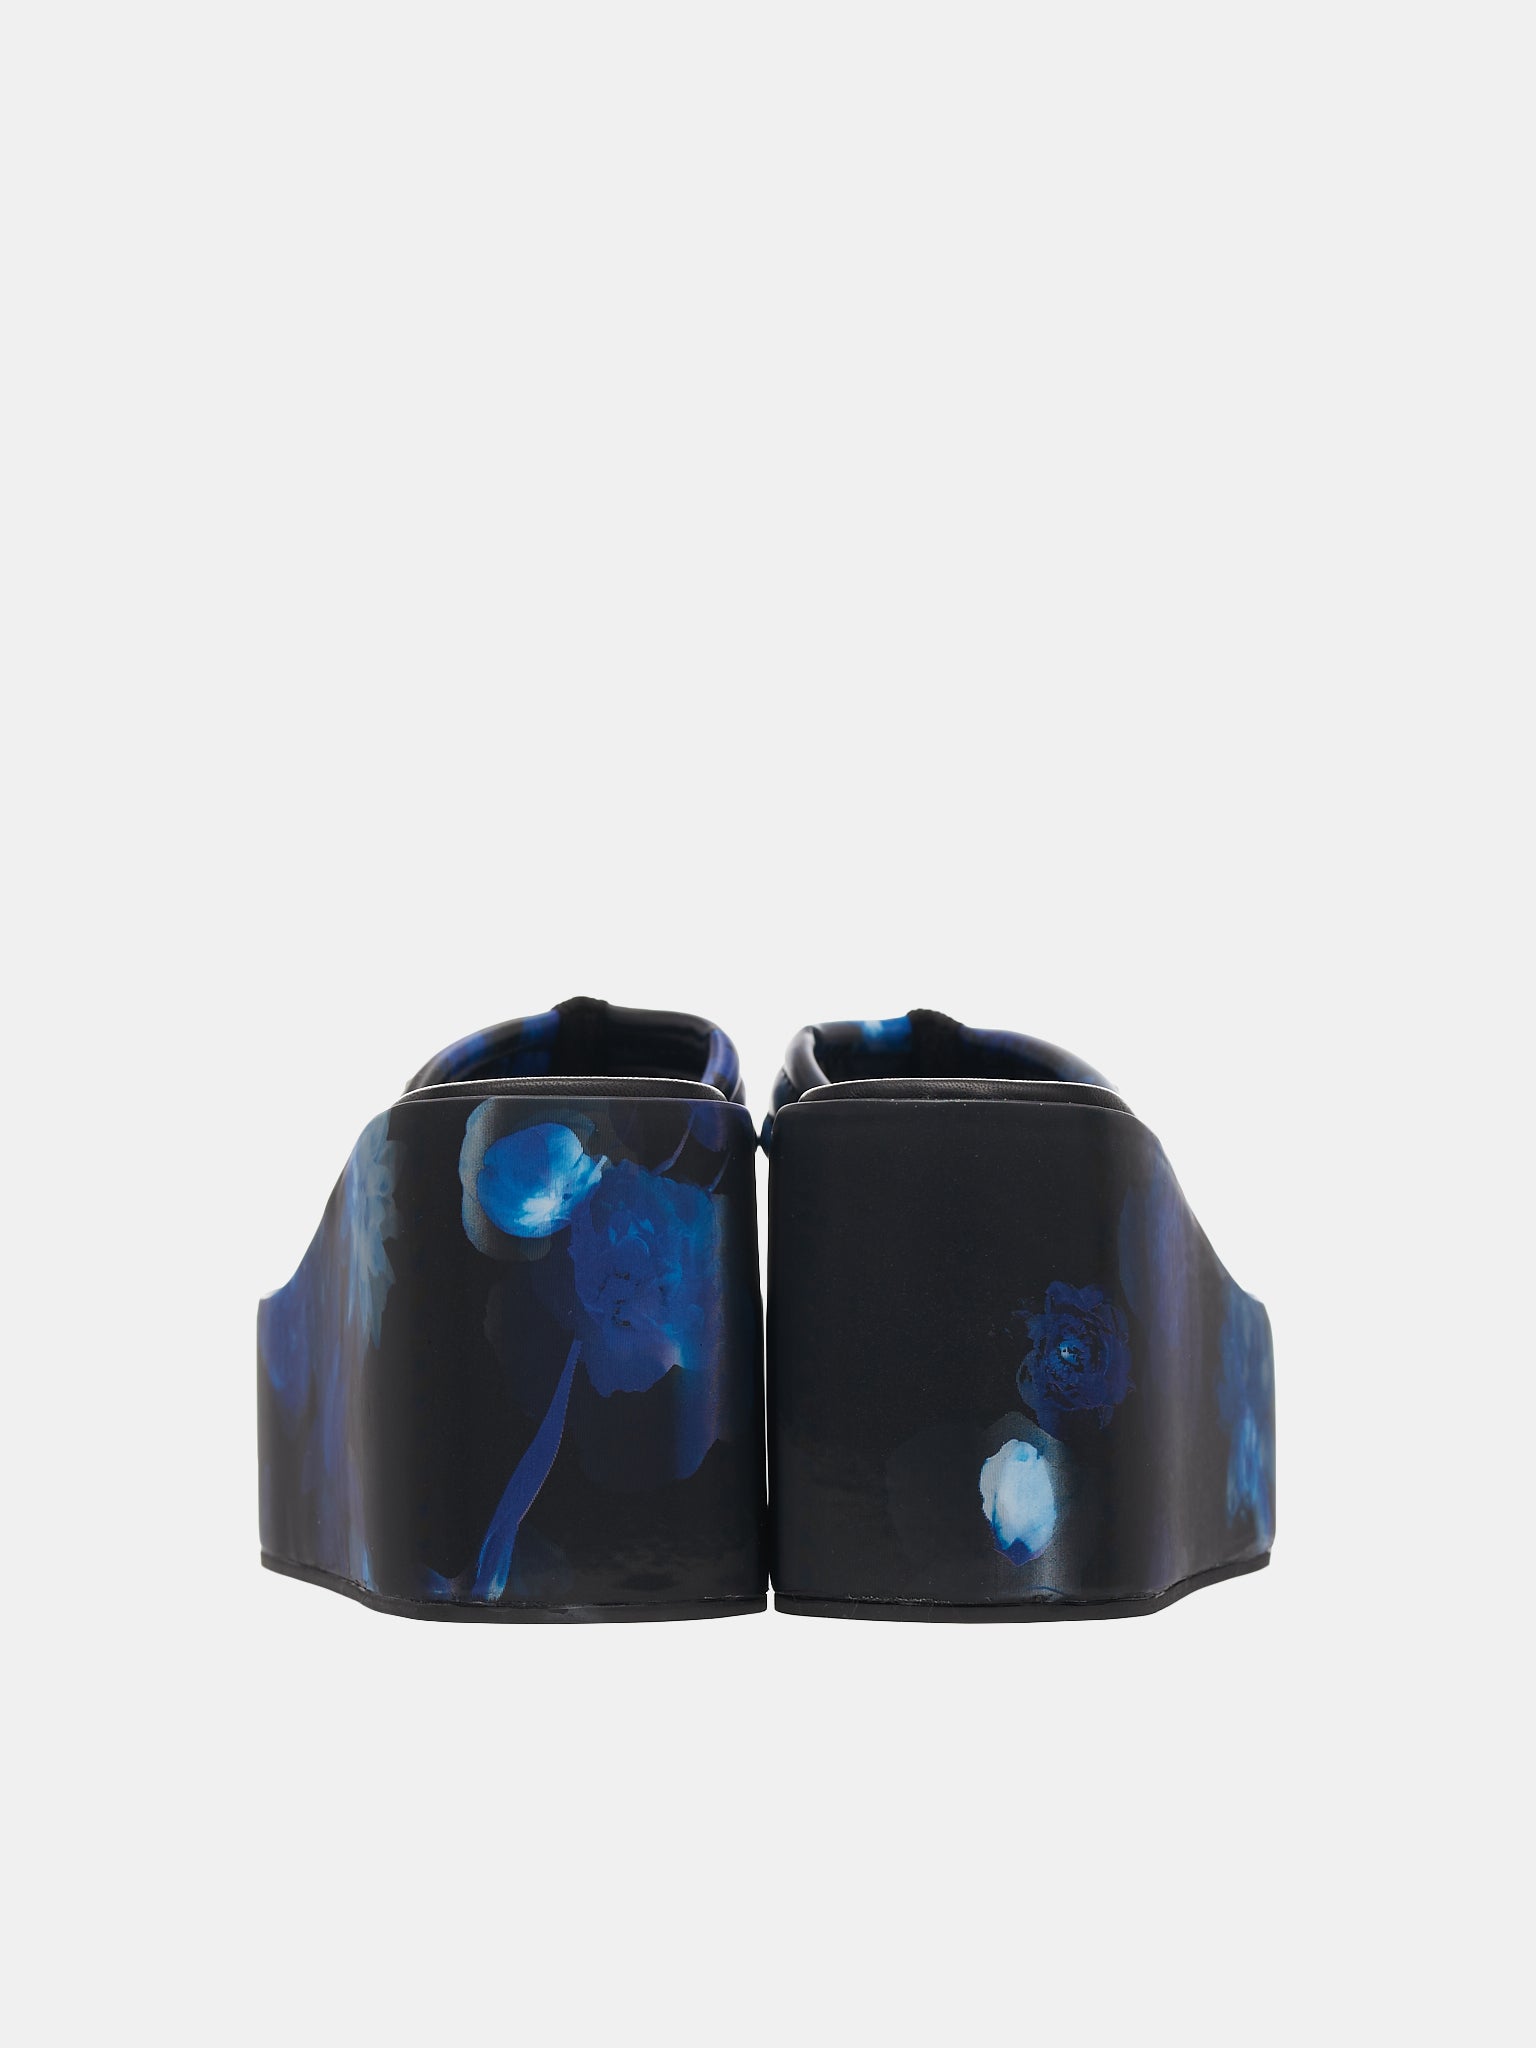 Holographic Wedge Sandals (COPSH09223-BLUE-BLACK)